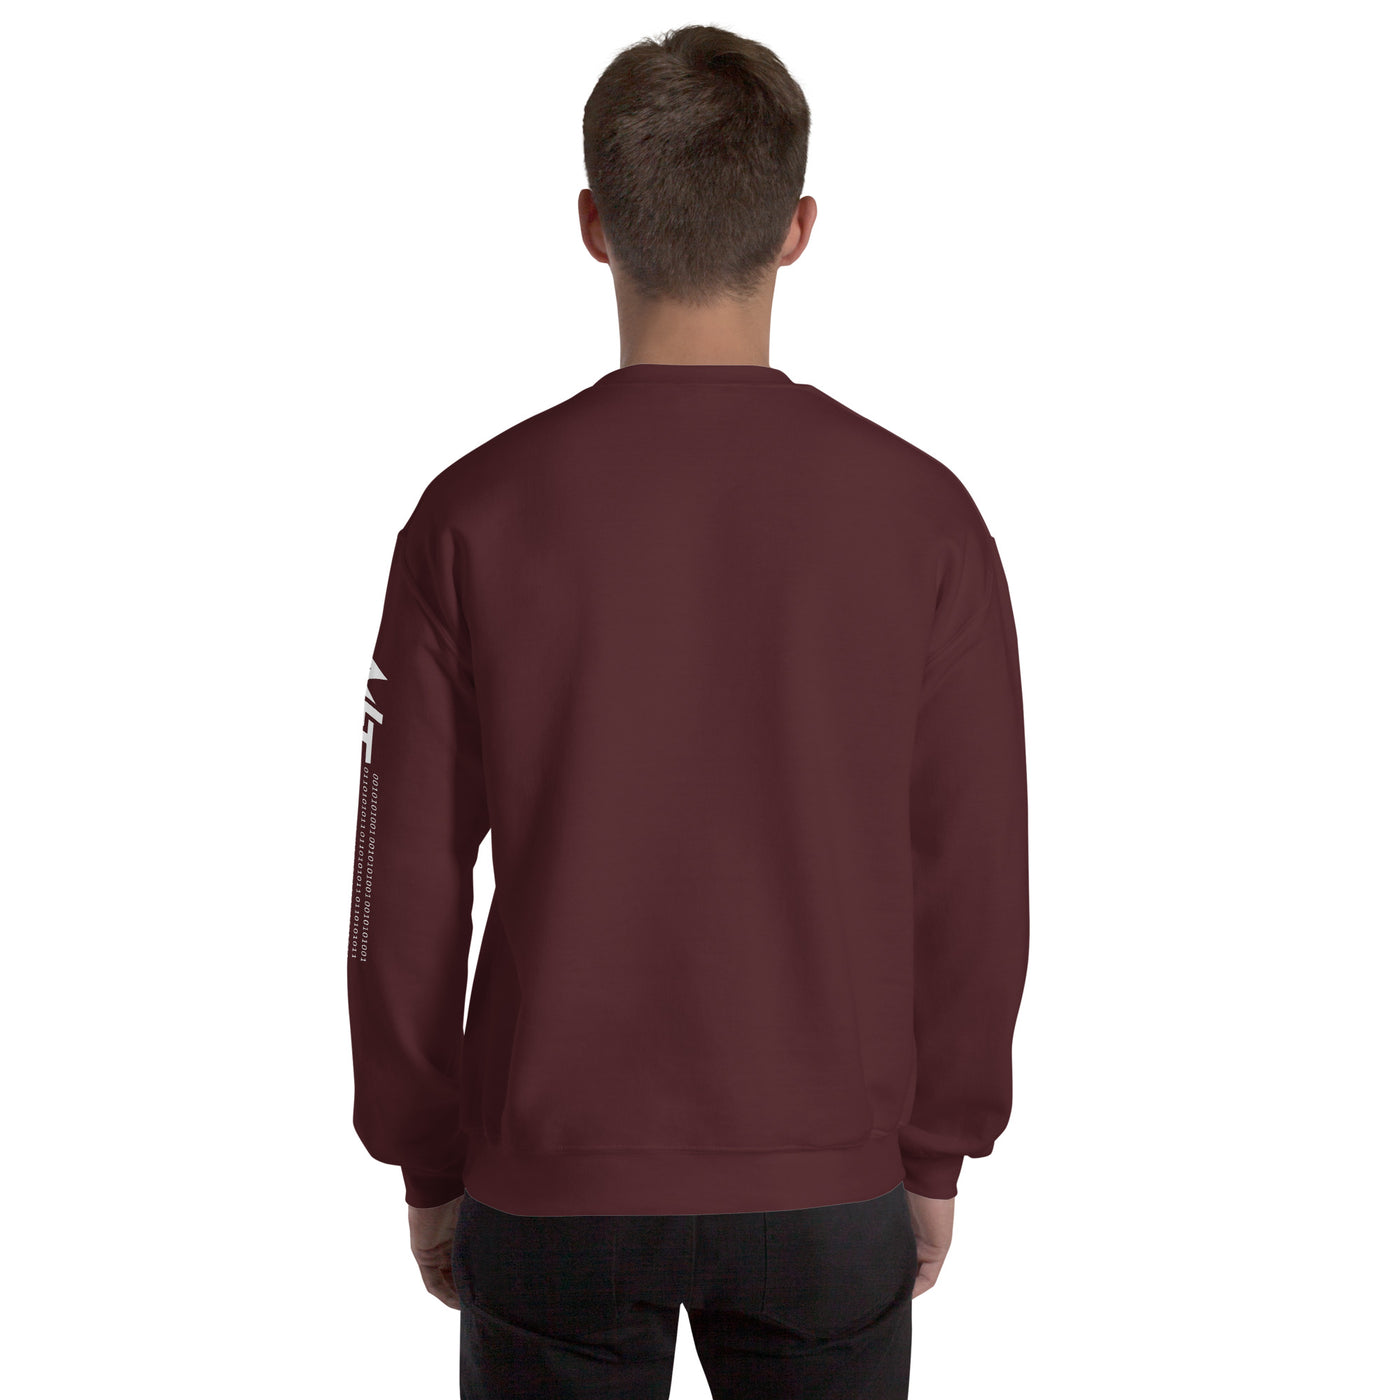 Red Mecha Guardian - Unisex Sweatshirt